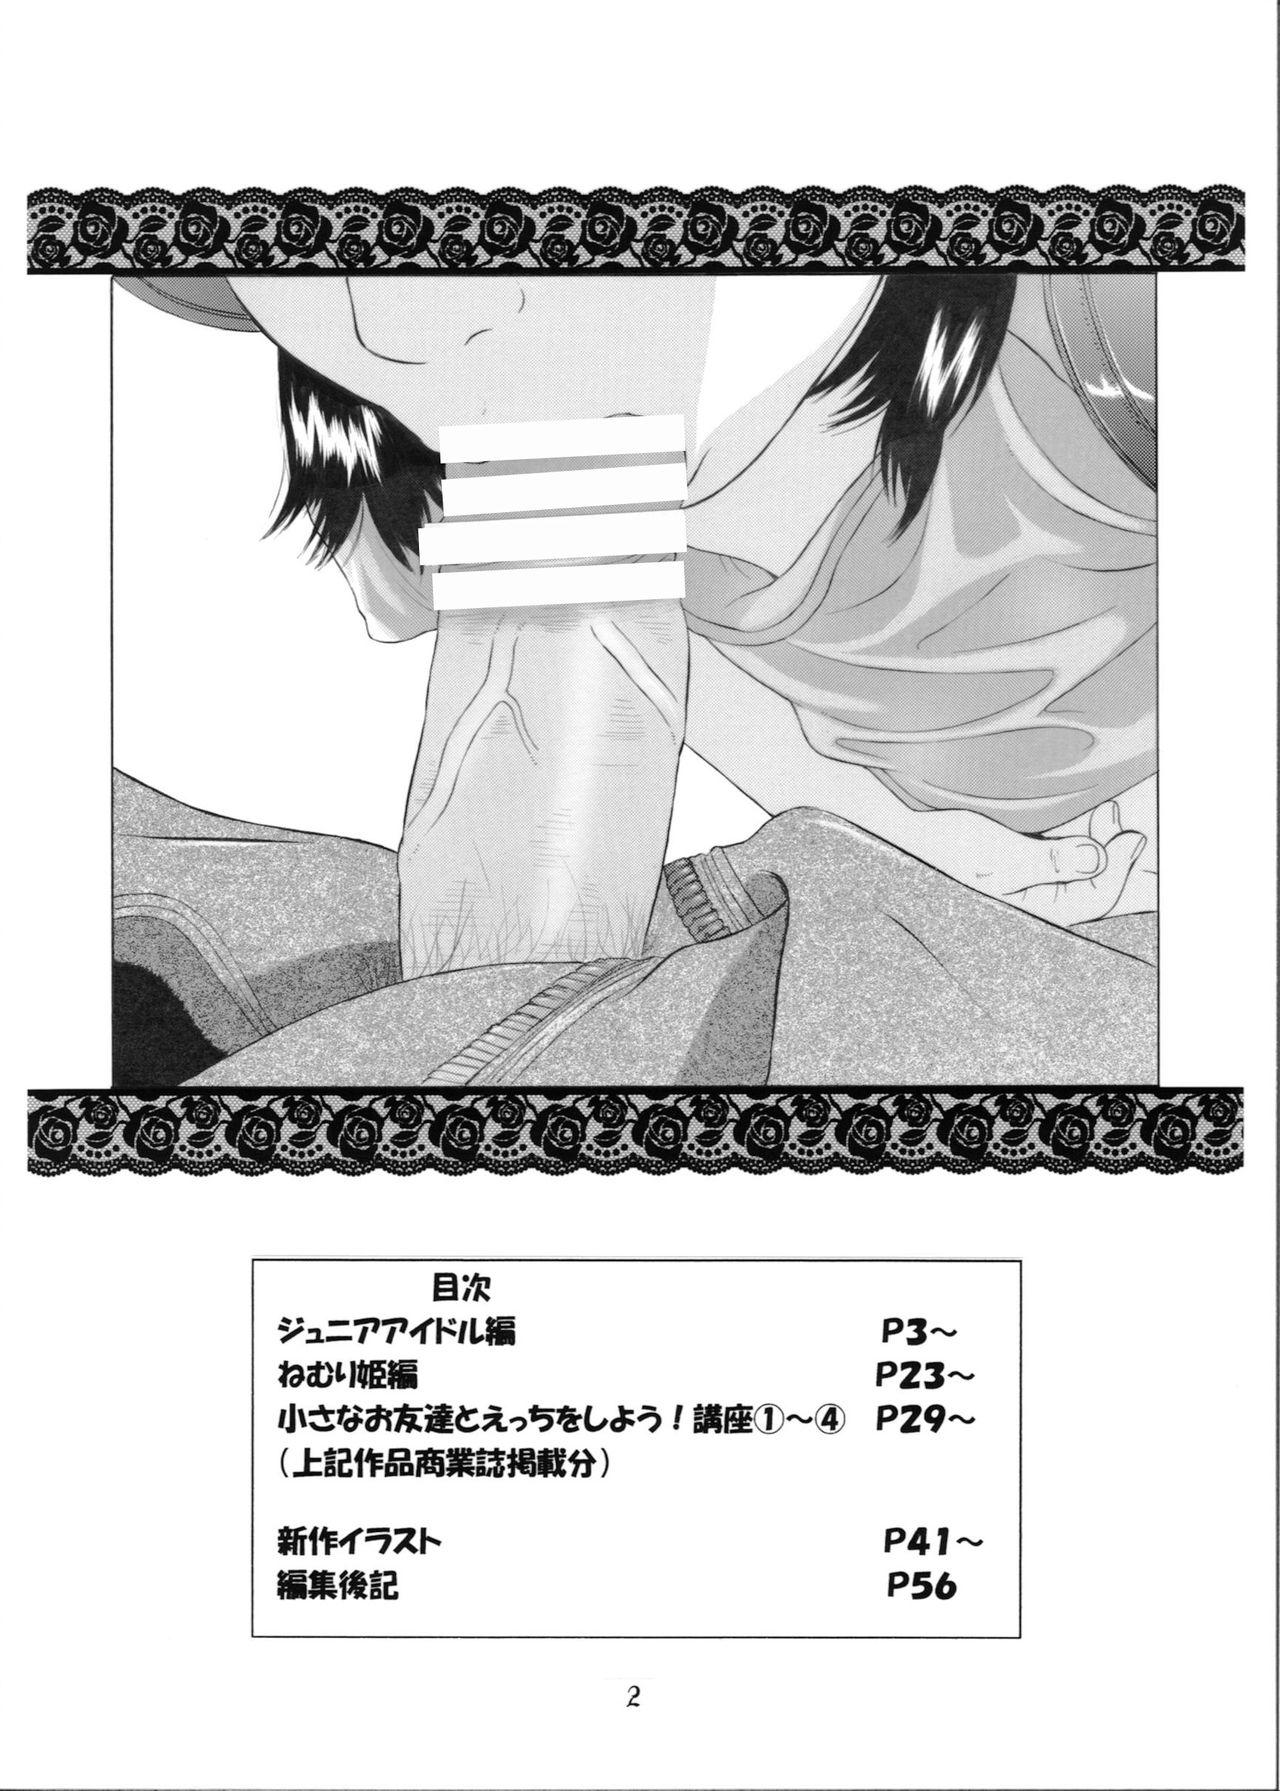 Moaning Kyuu-sai no Aojiru - Original Picked Up - Page 3